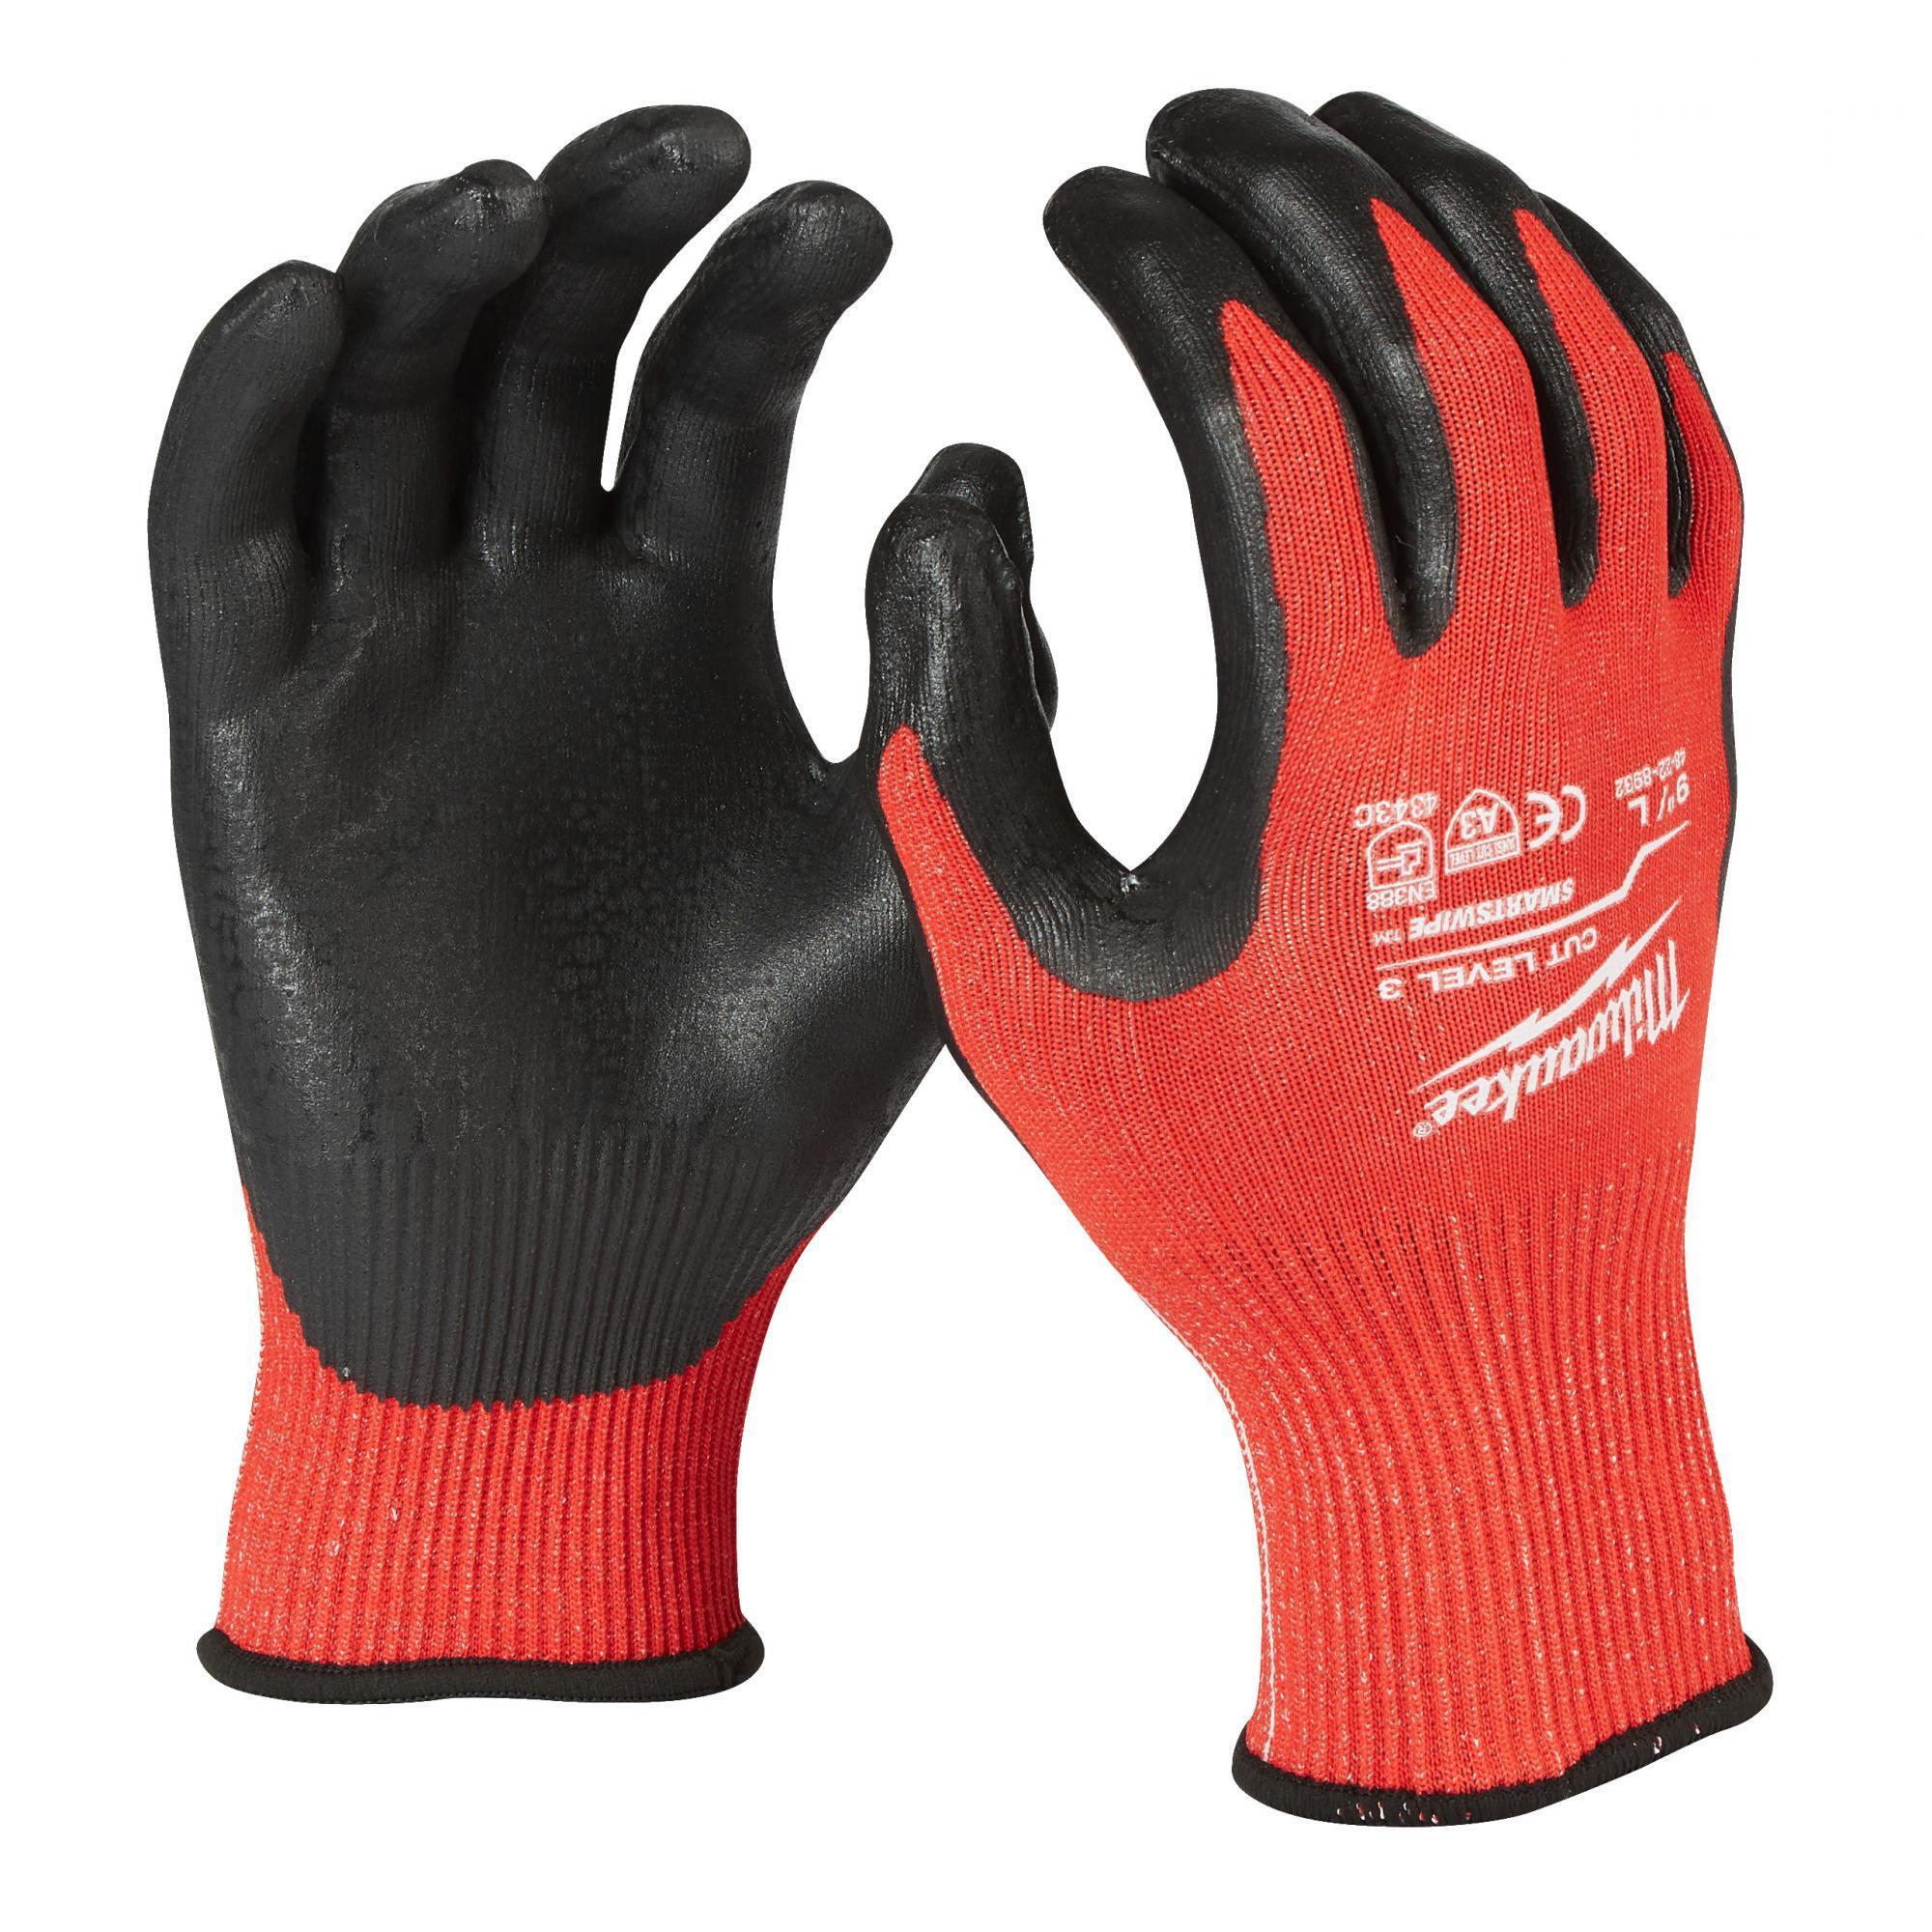 Перчатки защитные Milwaukee Cut Level 3/C, размер L/9, 4932471619, 1 пара защитные утепленные перчатки oregon